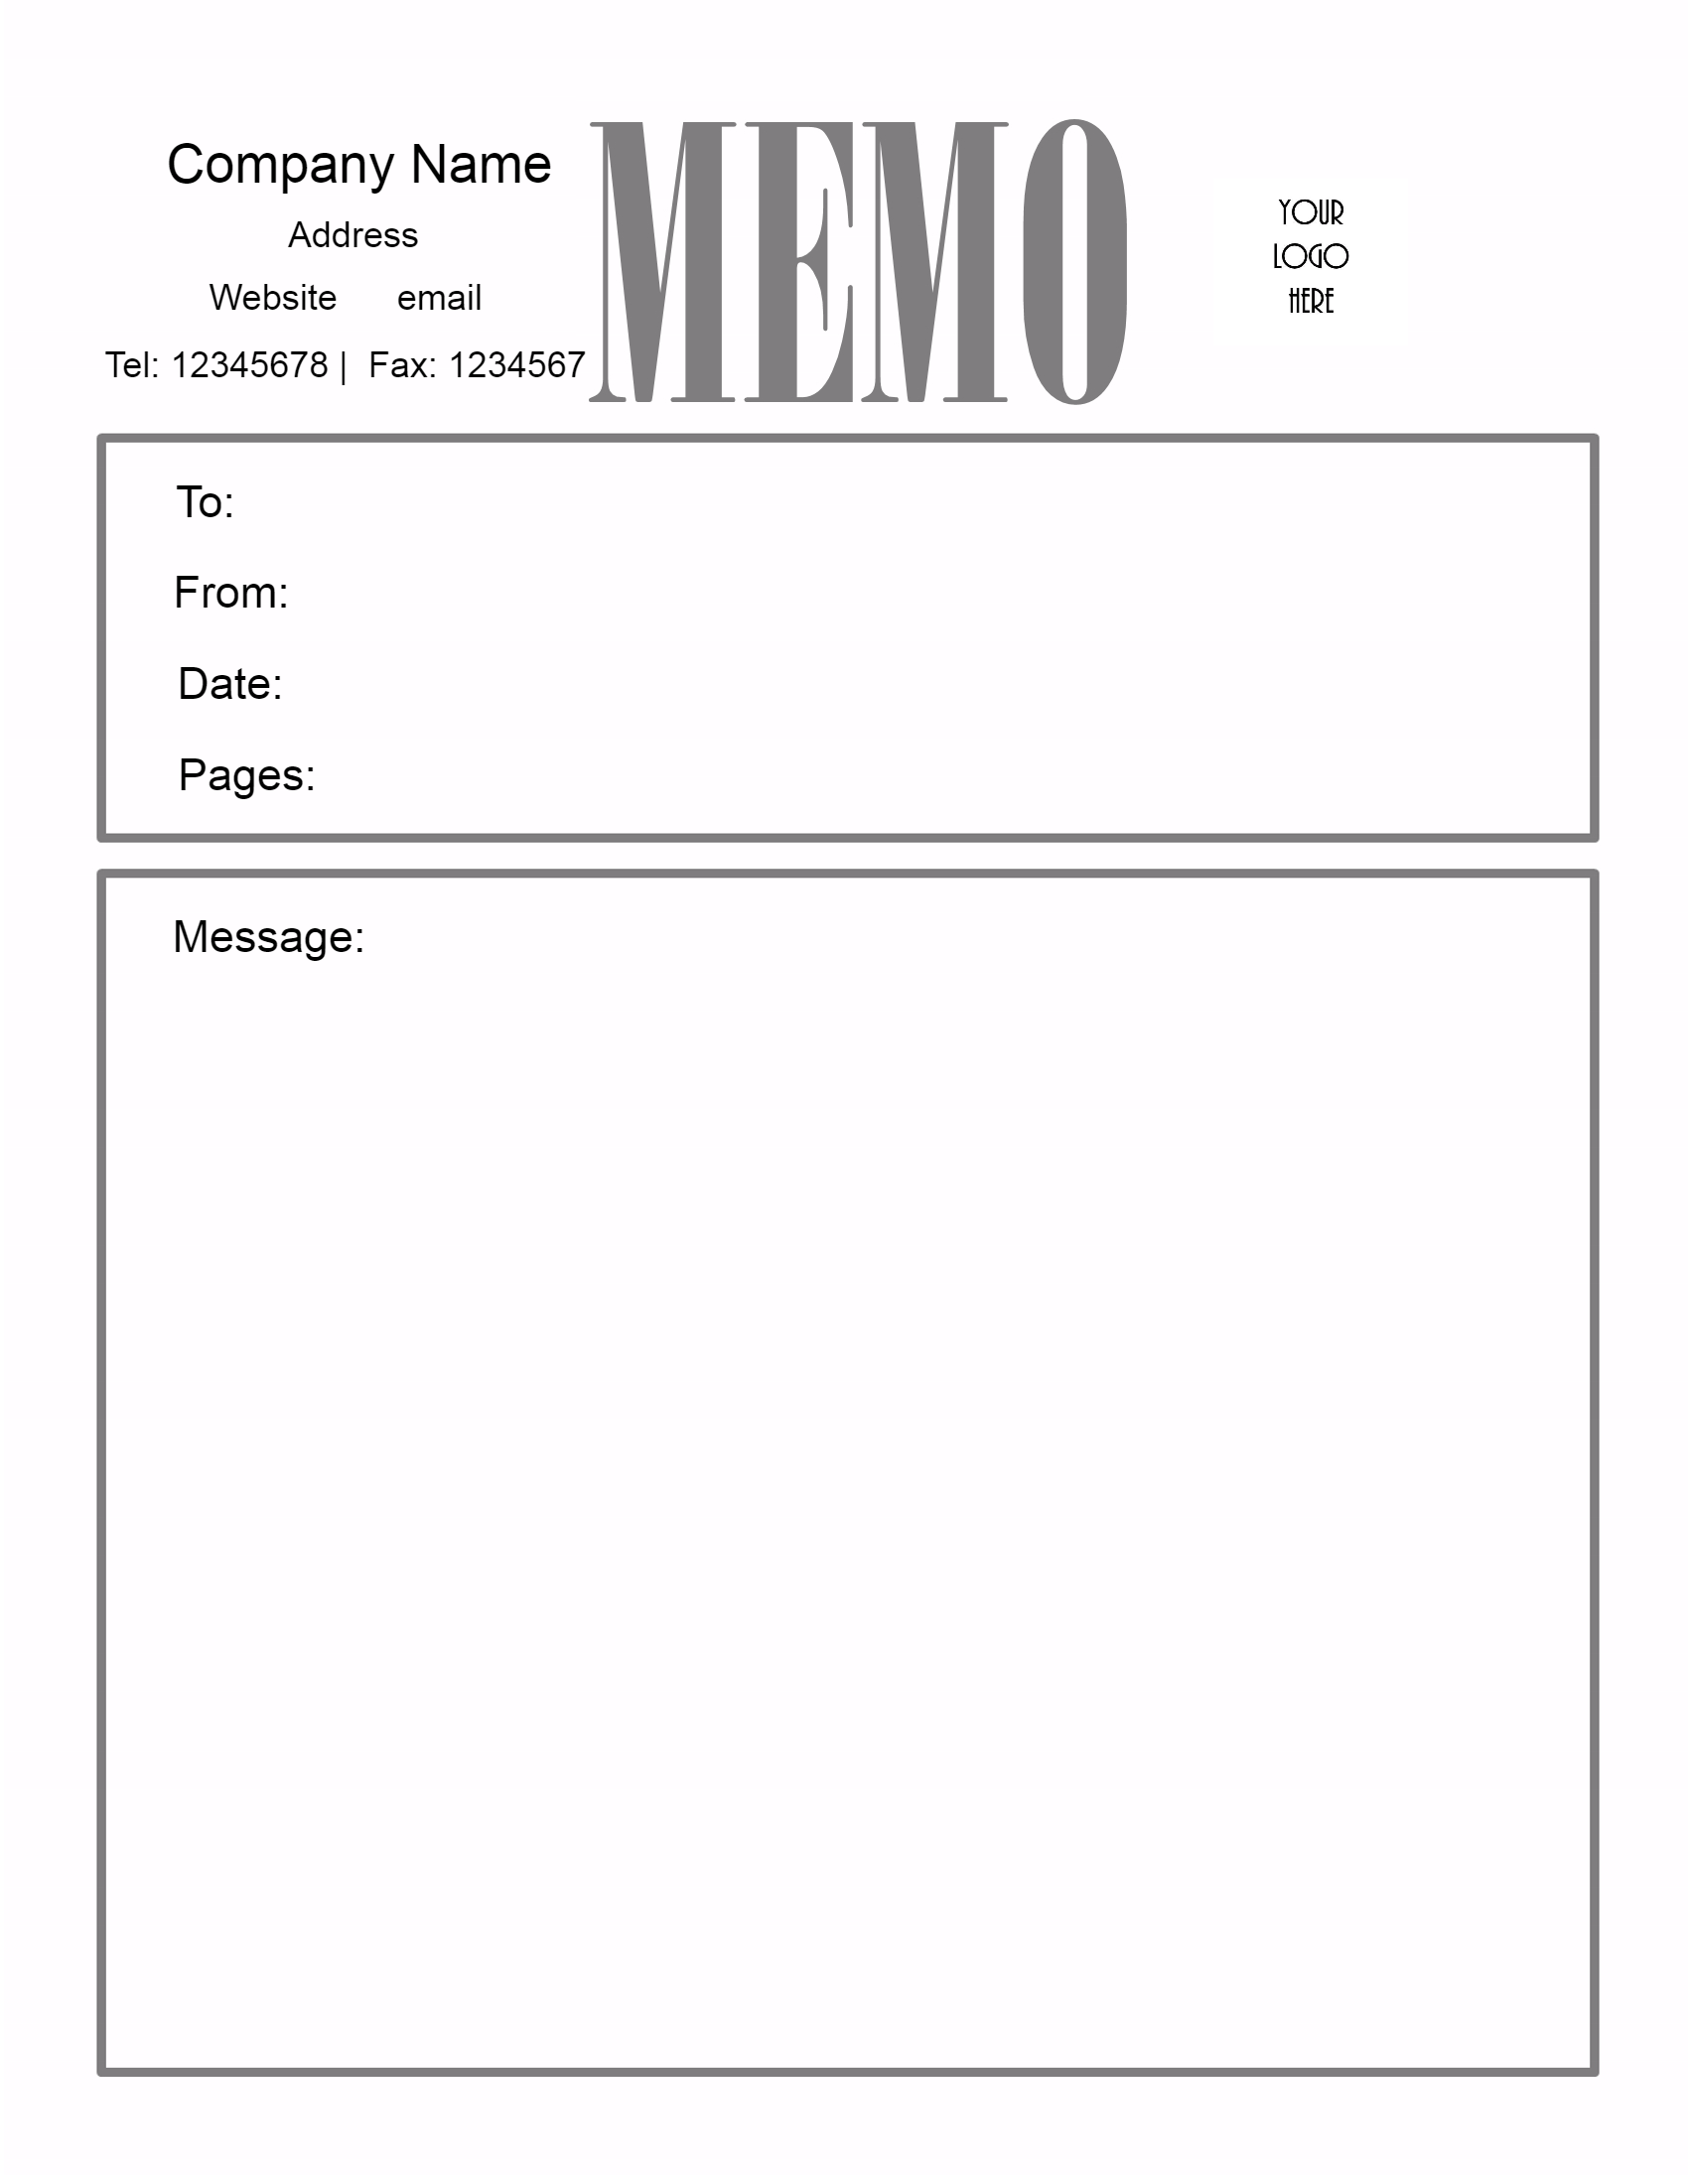 ms word memo templates